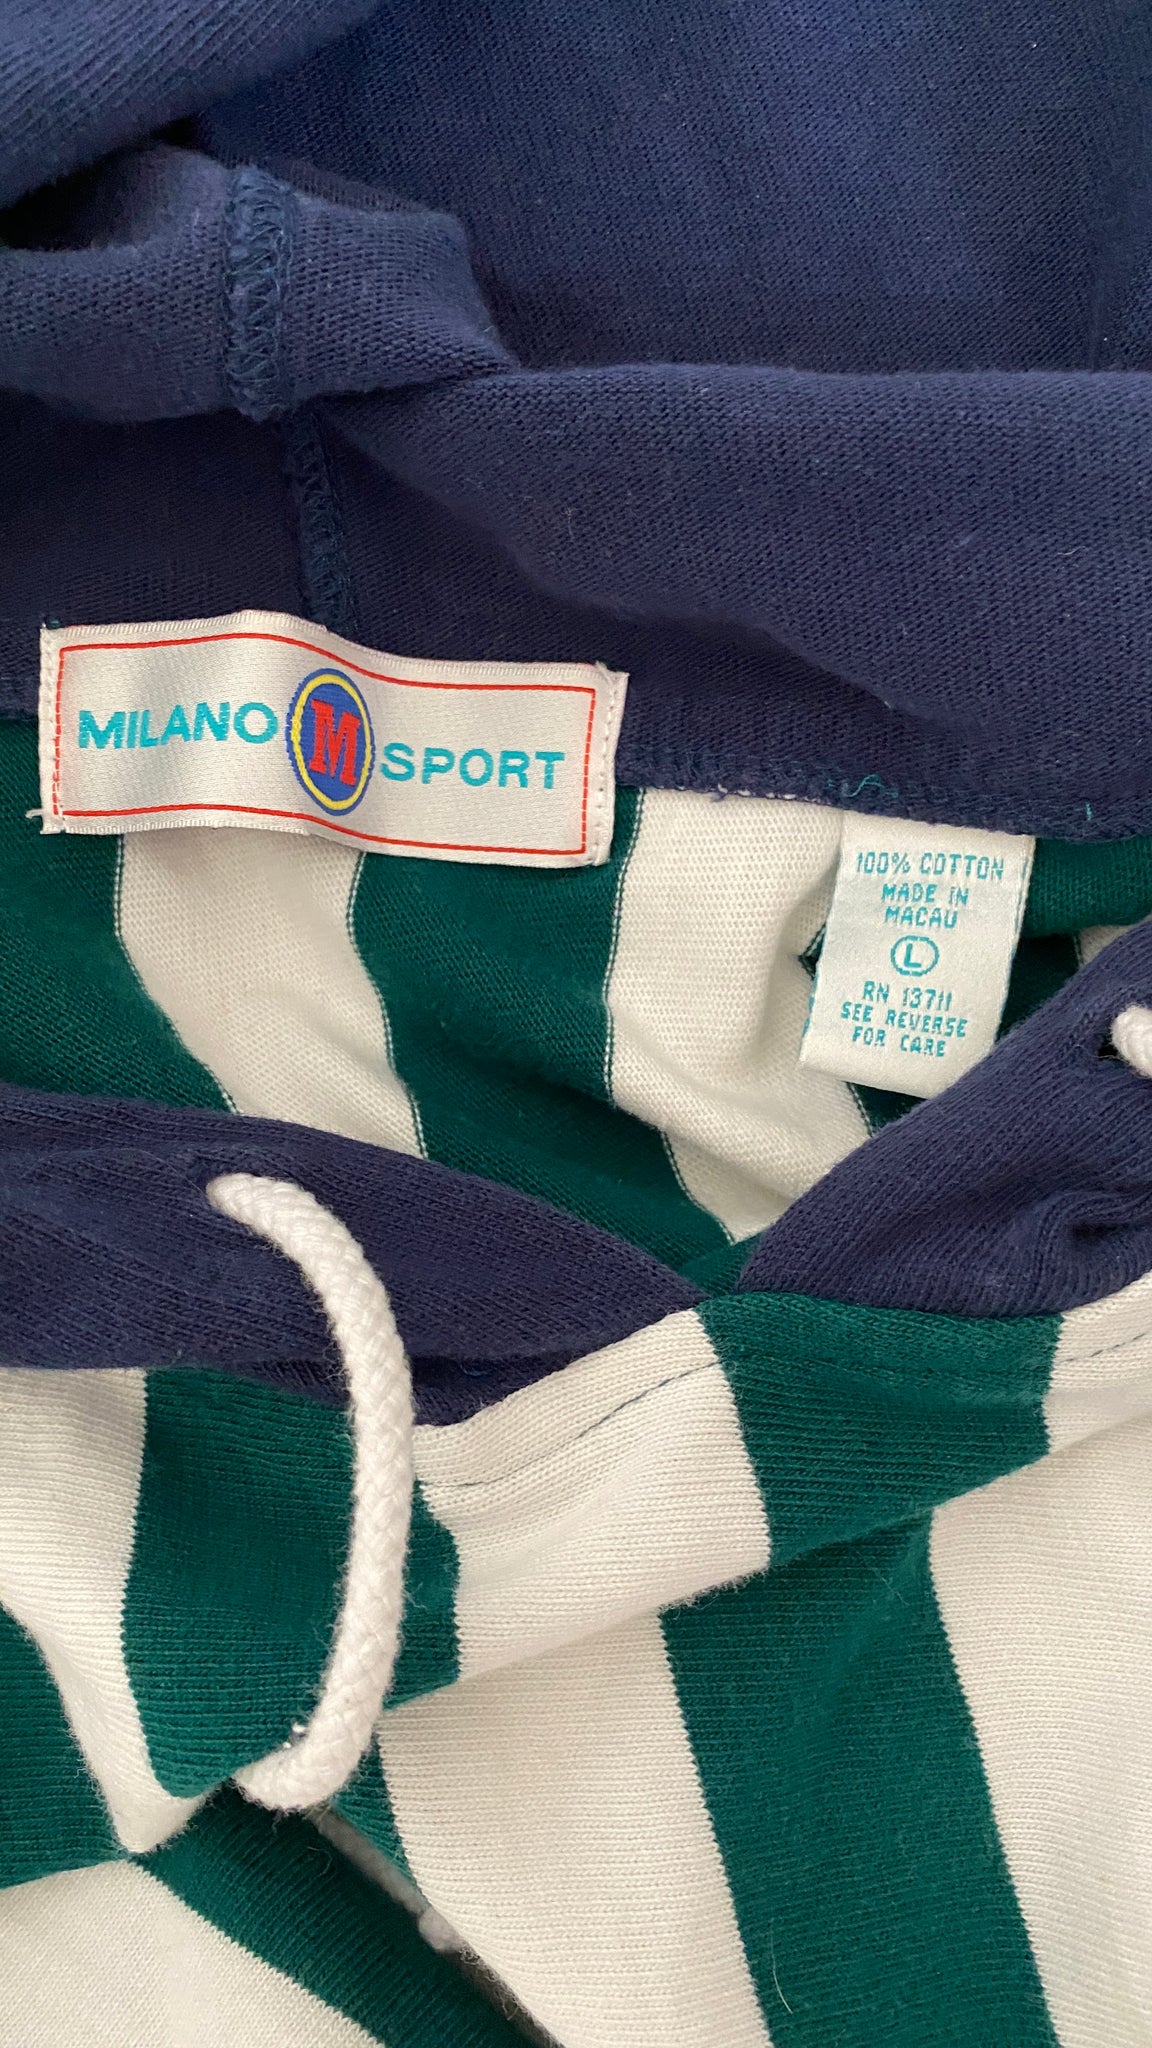 Milano Sport 90's Striped Shirt - L